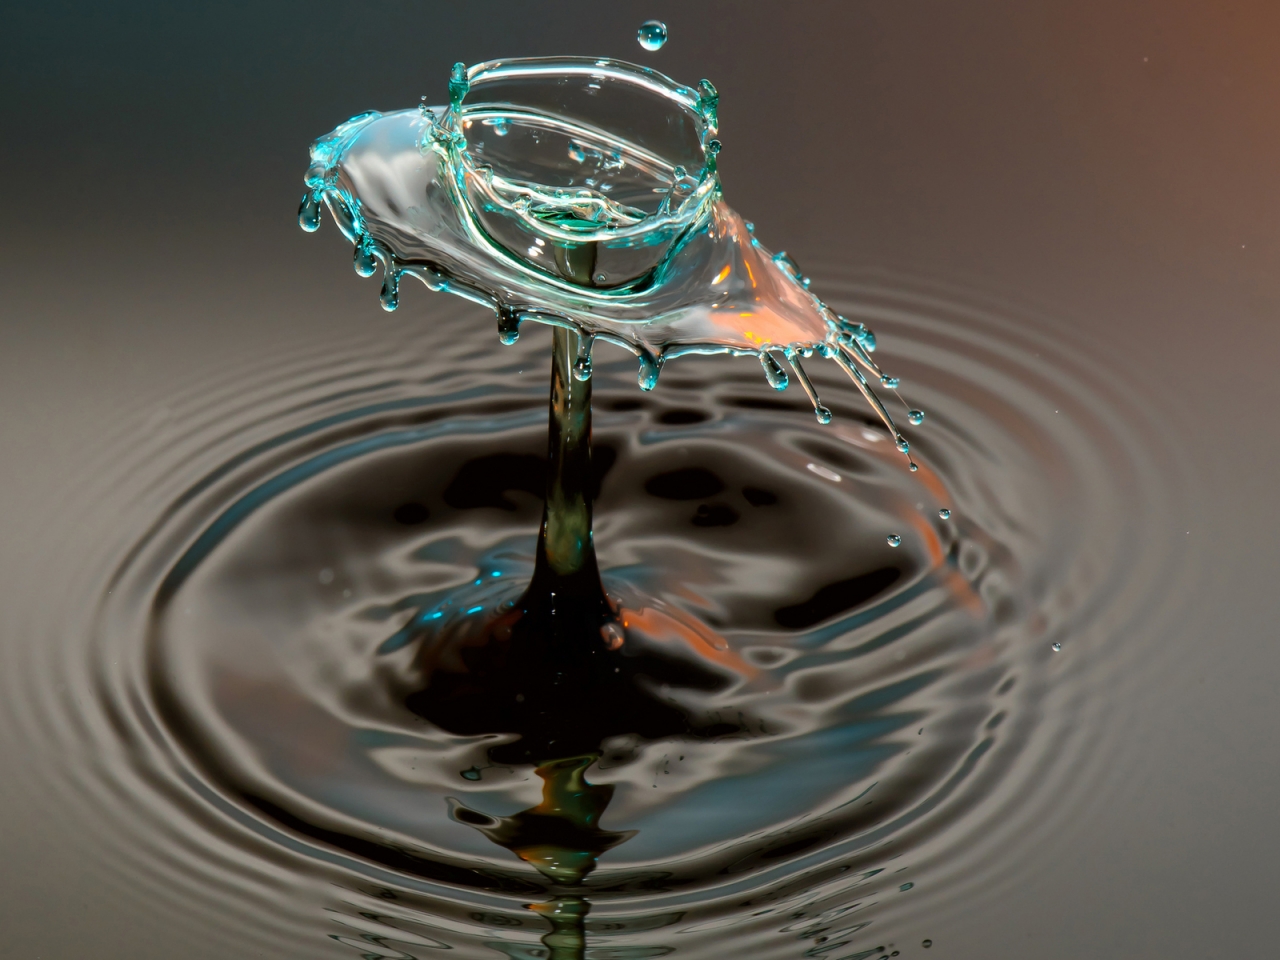 Water Splash for 1280 x 960 resolution